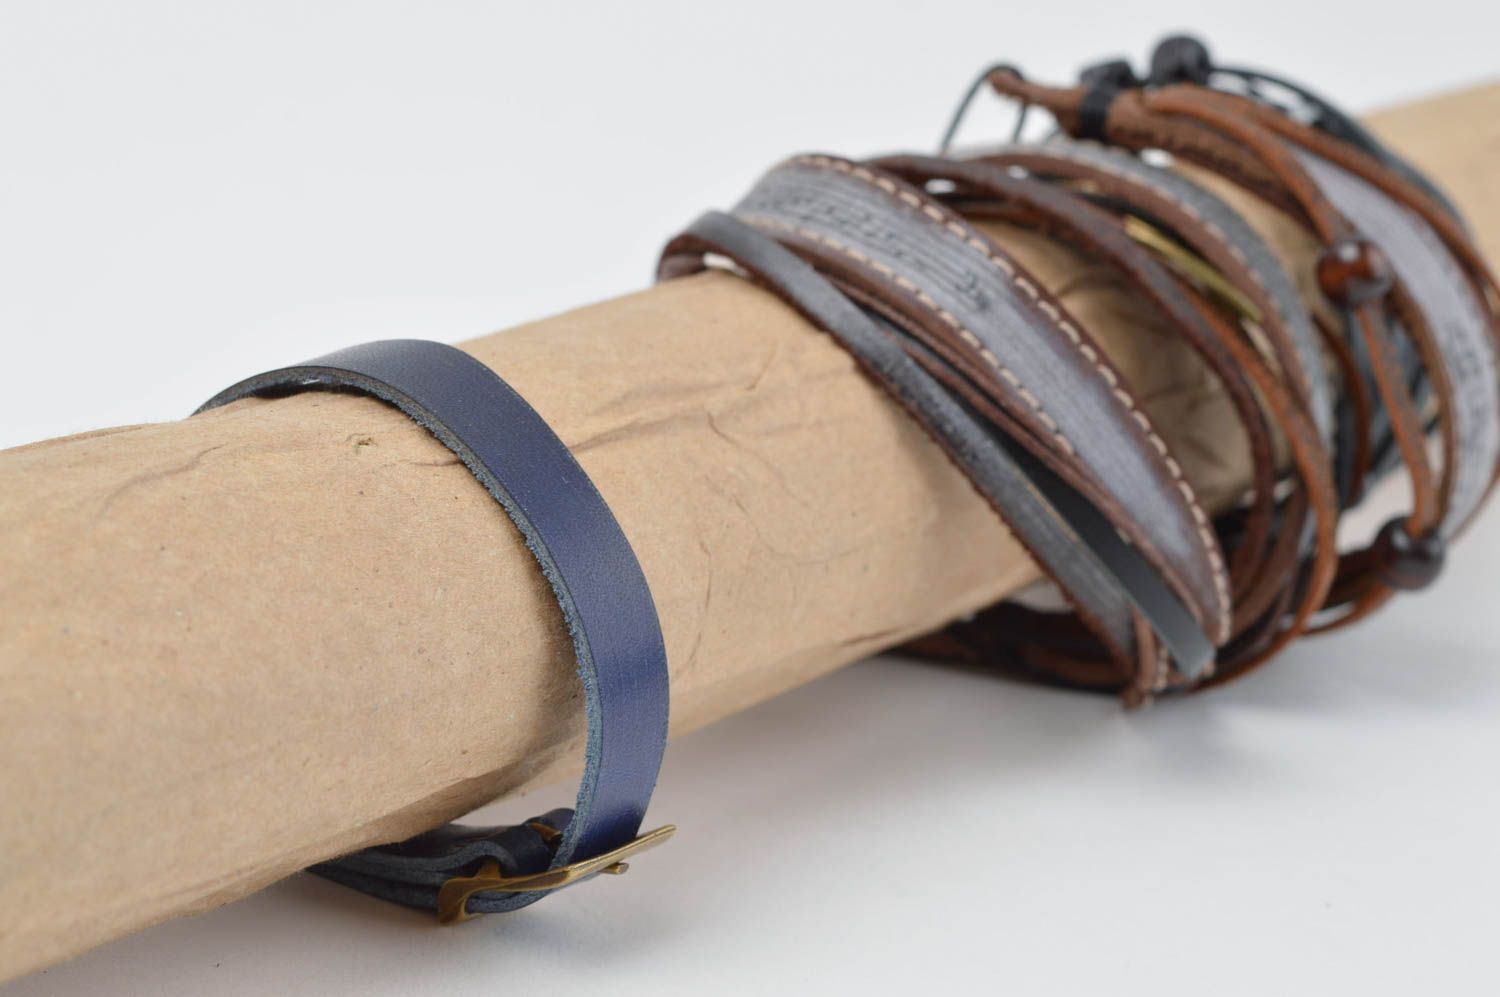 Stylish handmade leather bracelet leather goods fashion accessories gift ideas photo 2